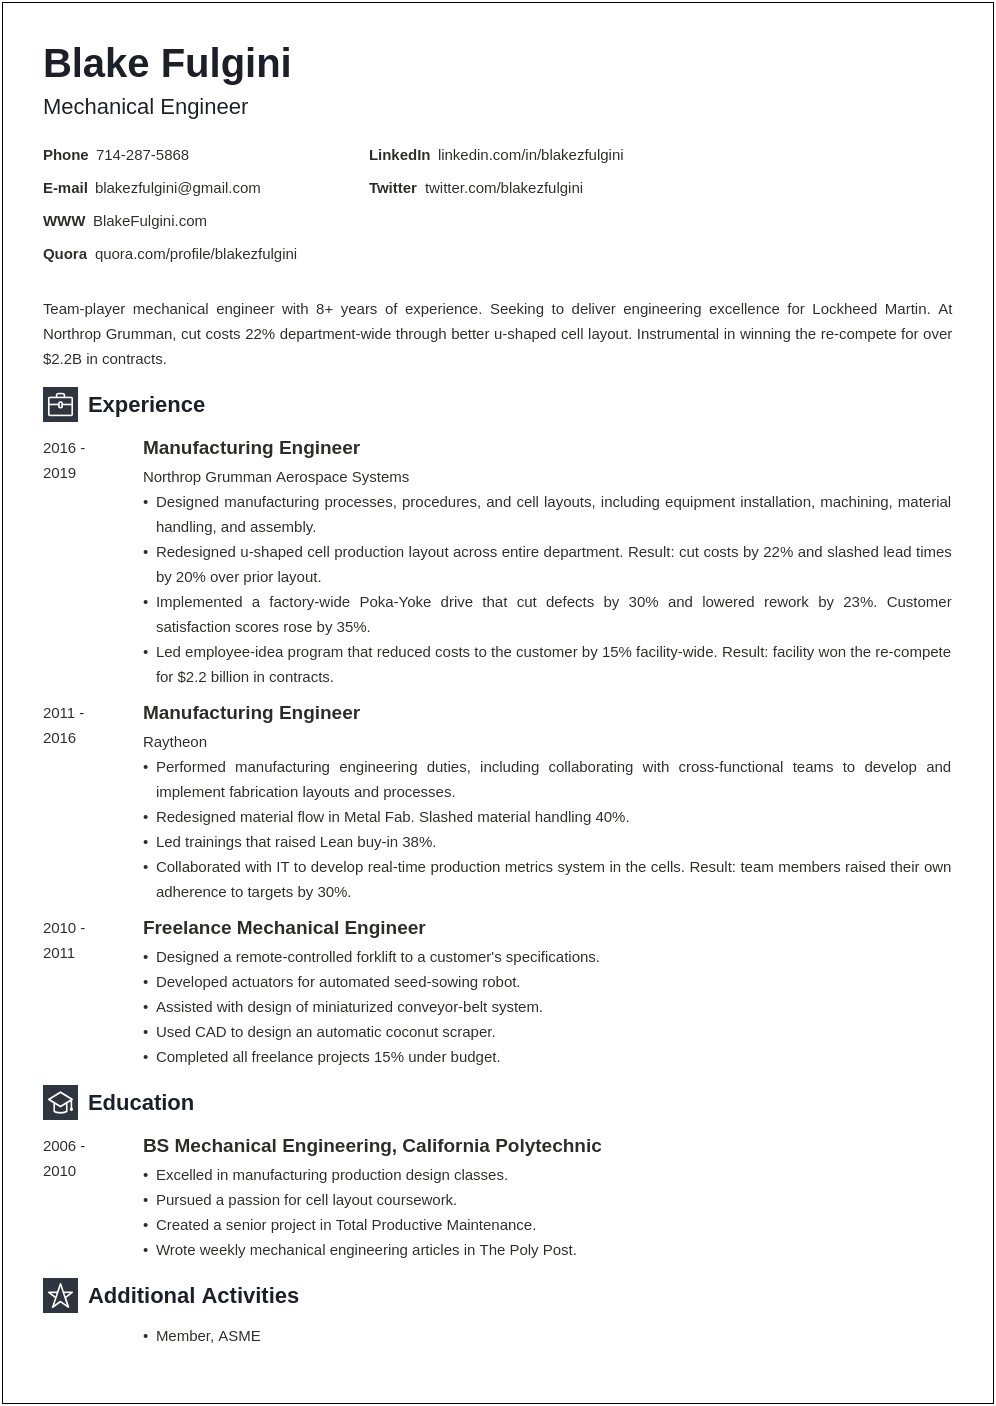 Mechanical Engineer Job Description For Resume